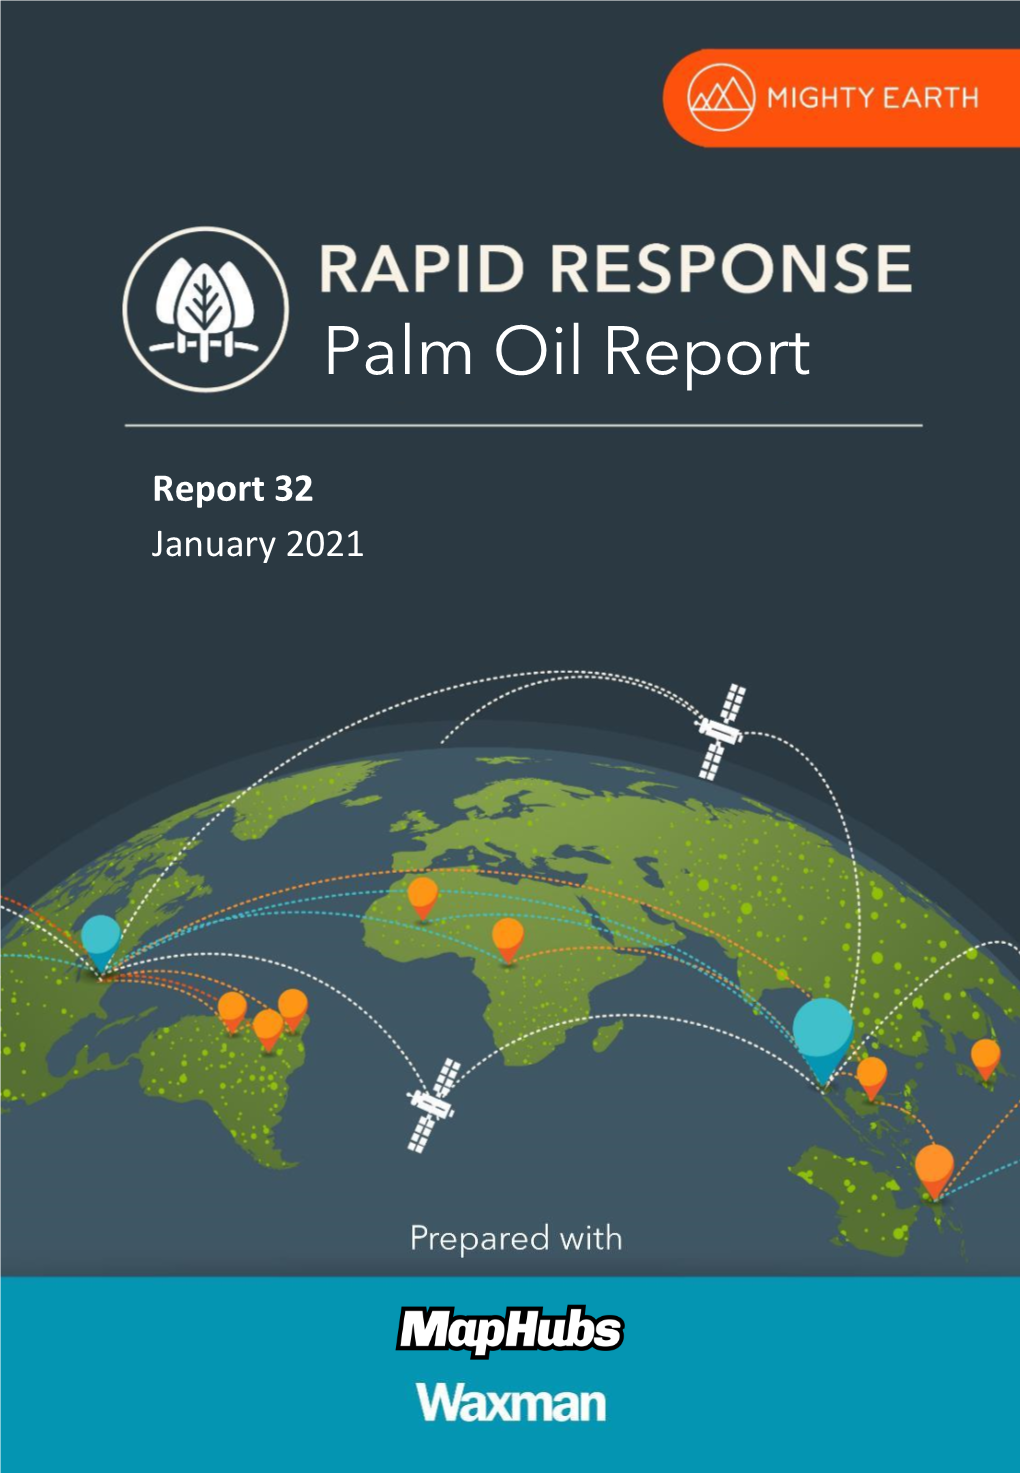 Palm Oil Report